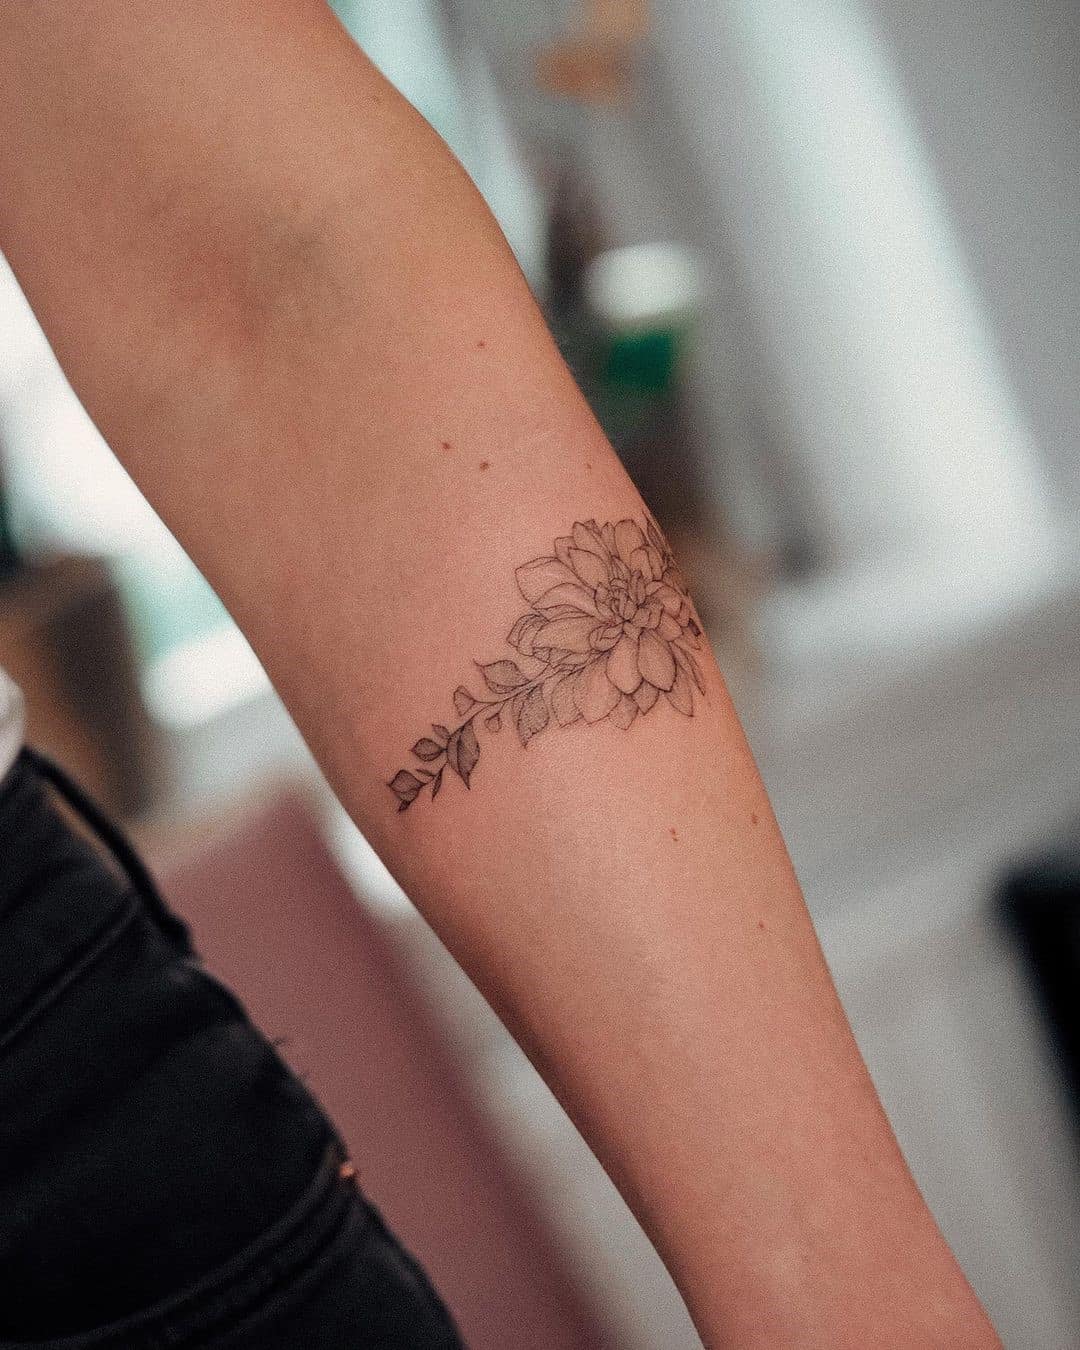 Hand poked lotus flower bracelet tattoo.